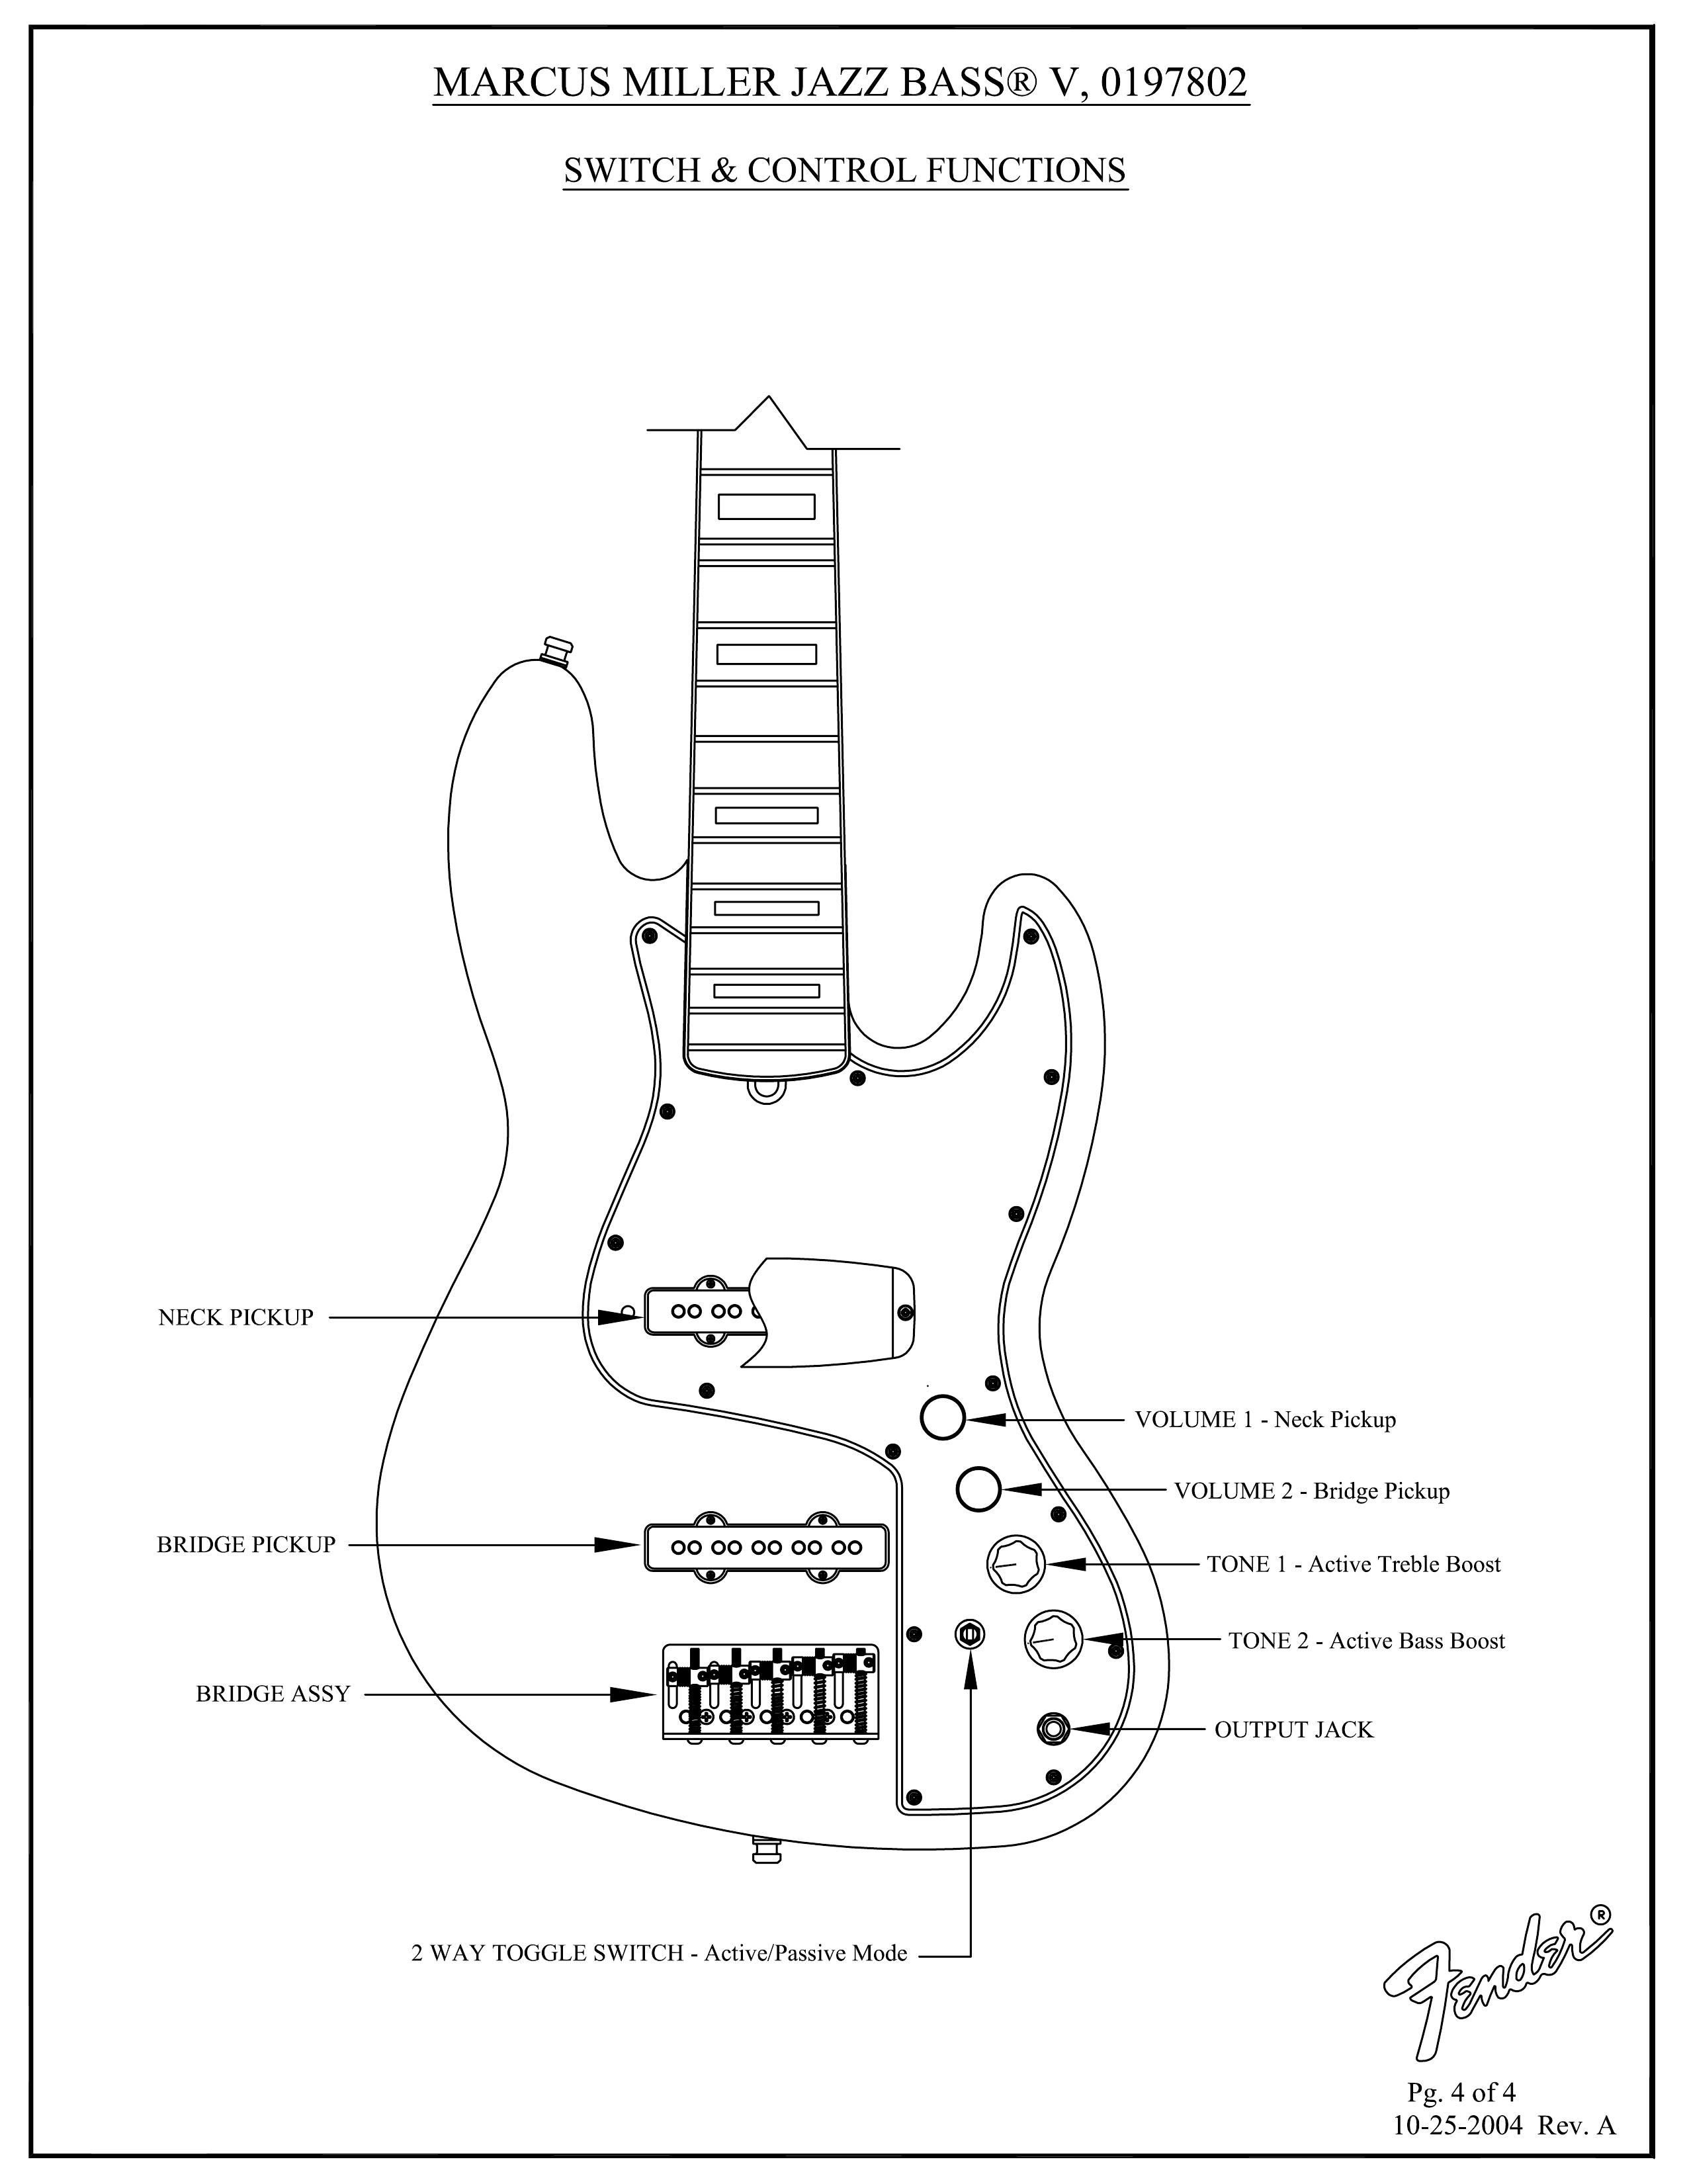 Fender Marcus Miller Jazz Bass Guitar User Manual